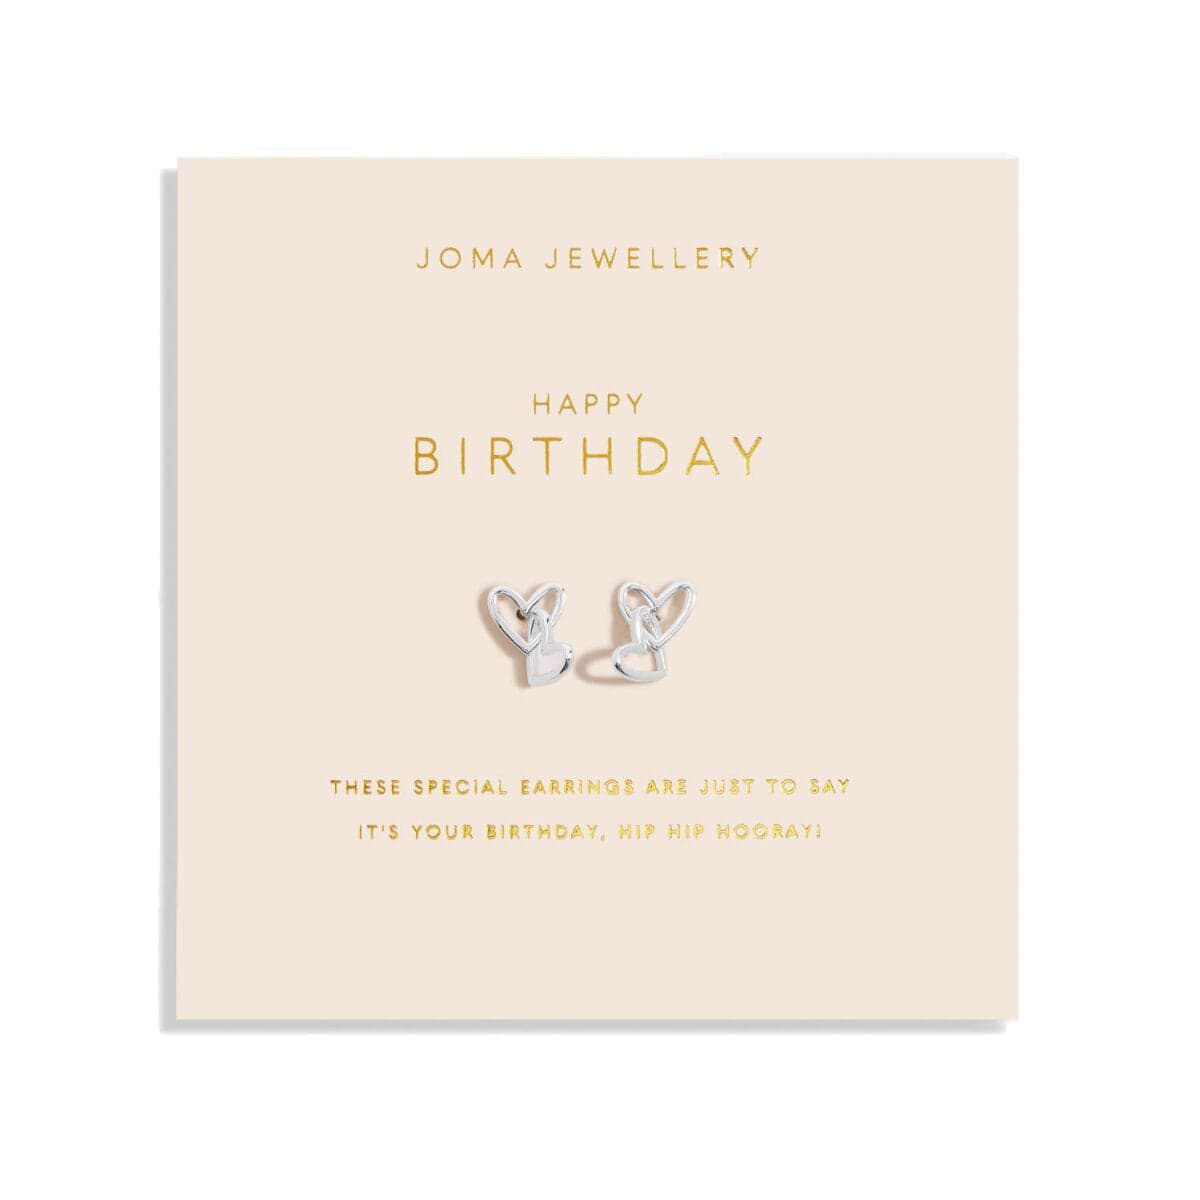 Joma Jewellery Earrings Joma Jewellery Forever Yours Earrings - Happy Birthday